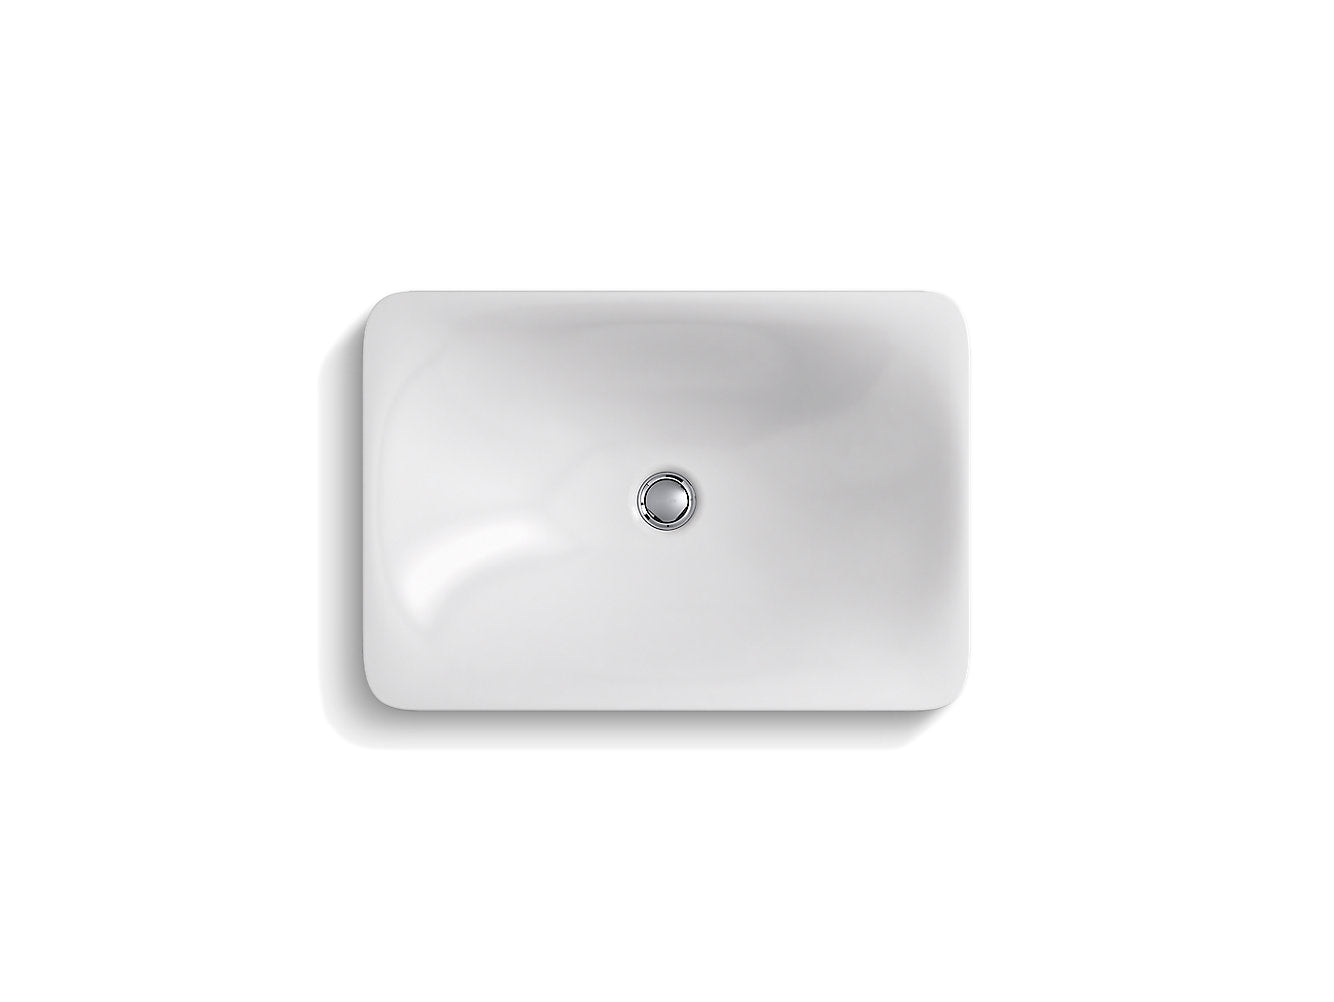 Kohler Carillon 21-1/8" x 14-9/16" Rectangle Wading Pool Drop-in Vessel Bathroom Sink- White